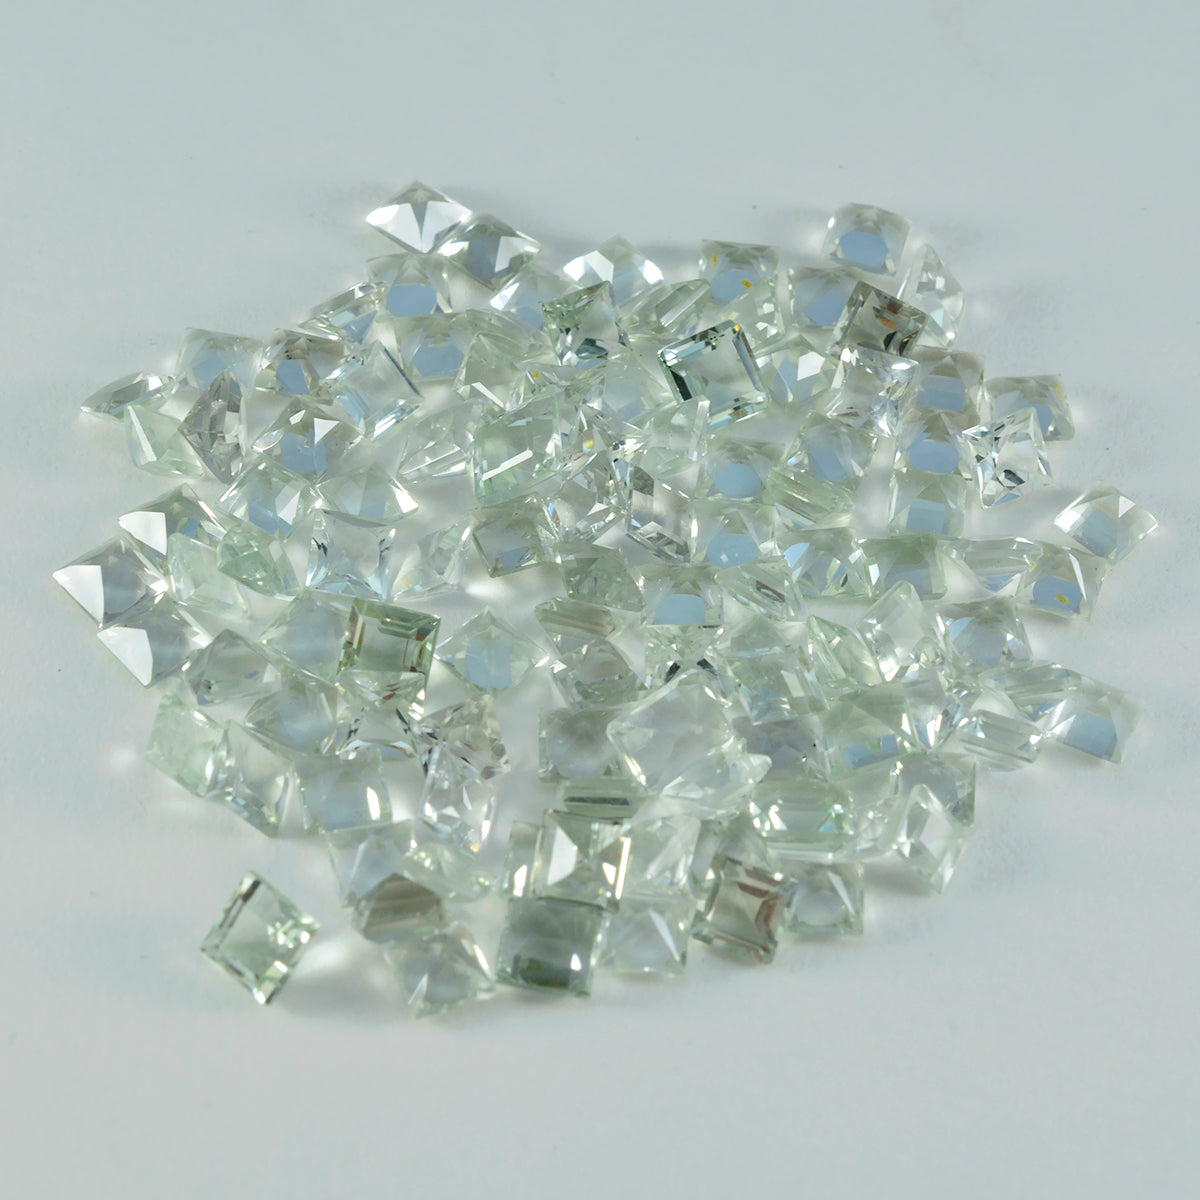 riyogems 1pc グリーン アメジスト ファセット 4x4 mm 正方形の形状の甘い品質の宝石